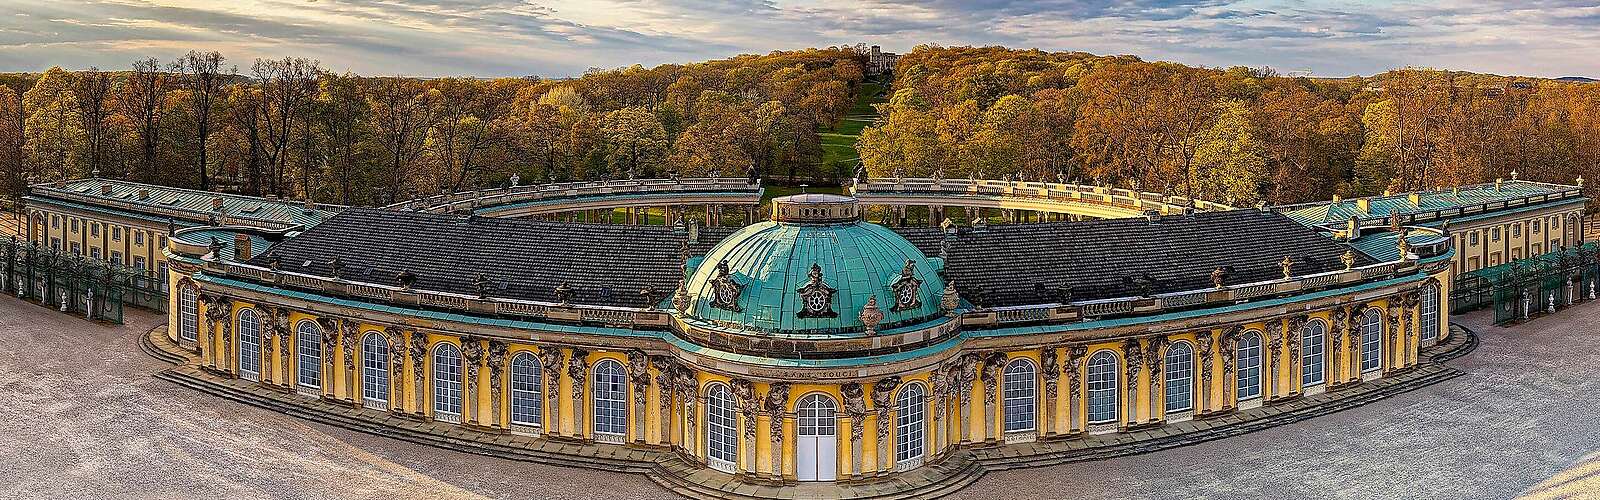 Schloss Sanssouci,
        
    

        Foto: PMSG und SPSG/André Stiebitz